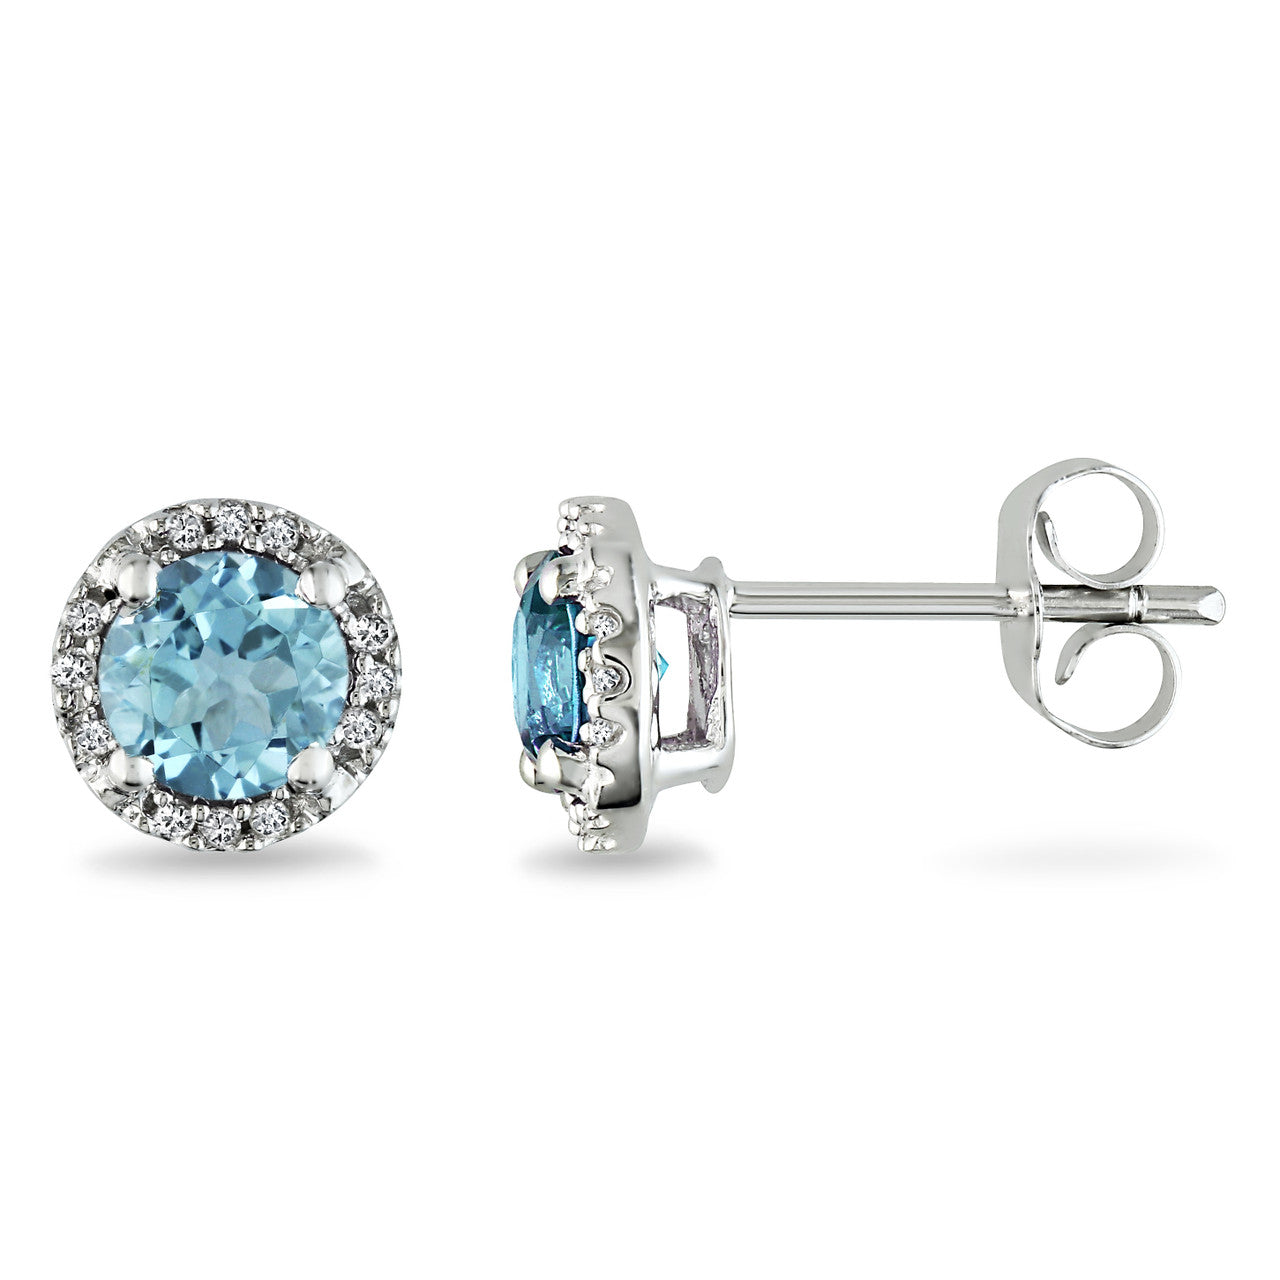 Ice Jewellery 1.06ct Blue Topaz and Diamond Ear Pin Earrings in 10k White Gold - 7500080341 | Ice Jewellery Australia